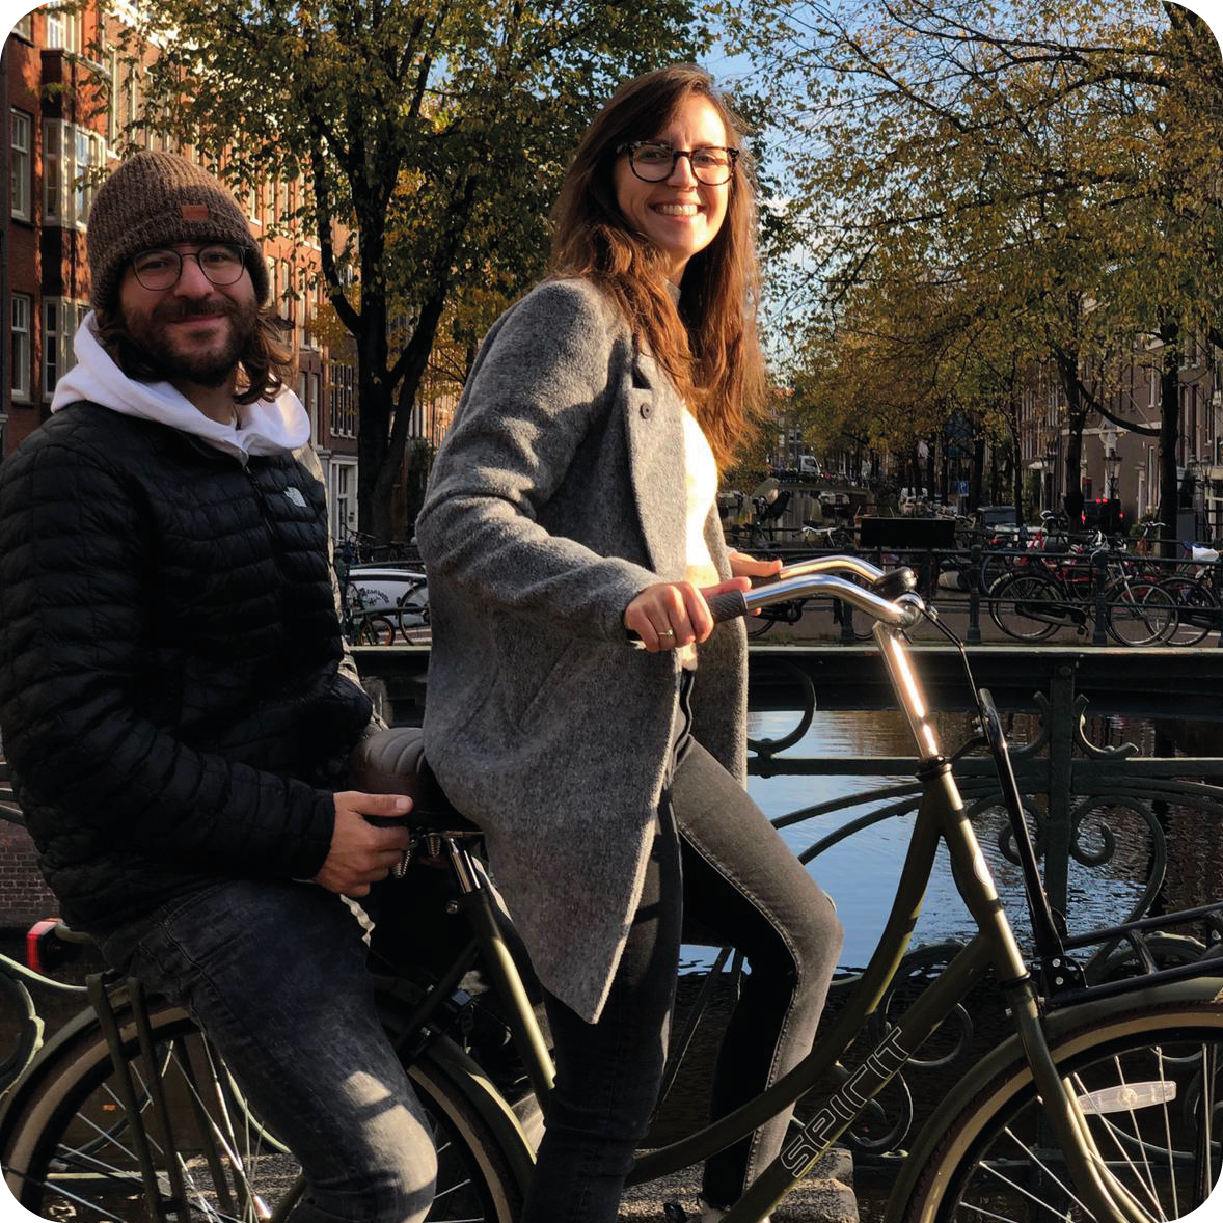 #Ride #Love #Share : Les histoires extraordinaires de cyclistes ordinaires